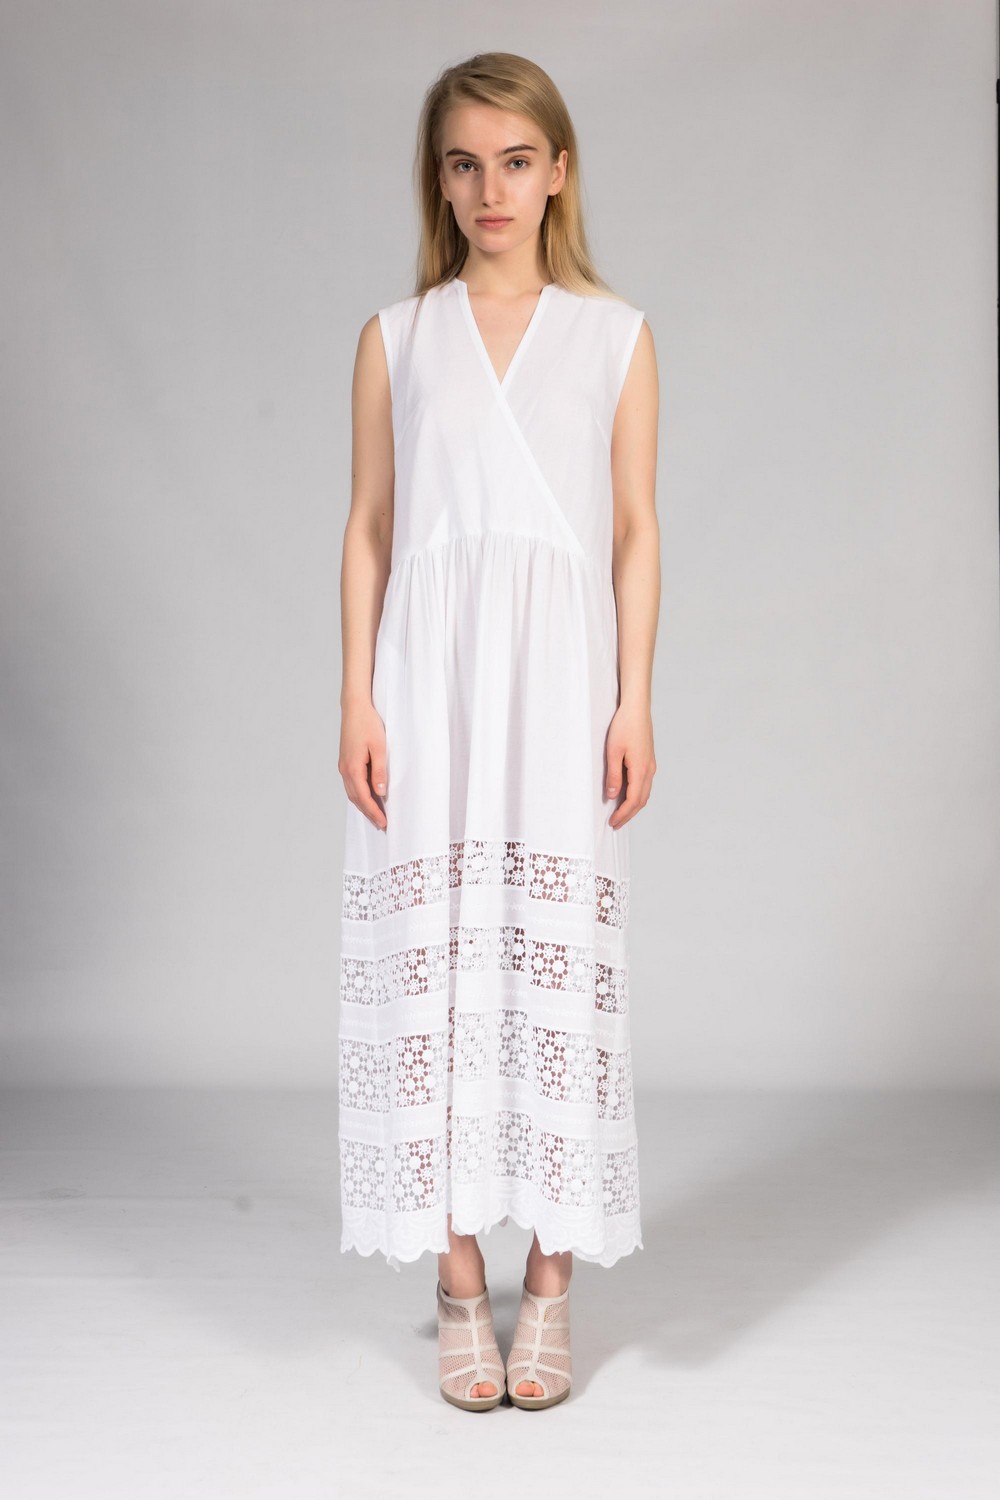 Buy Summer cotton long loose white dress, Sleeveless V neck dress, Сomfortable casual ladies dress